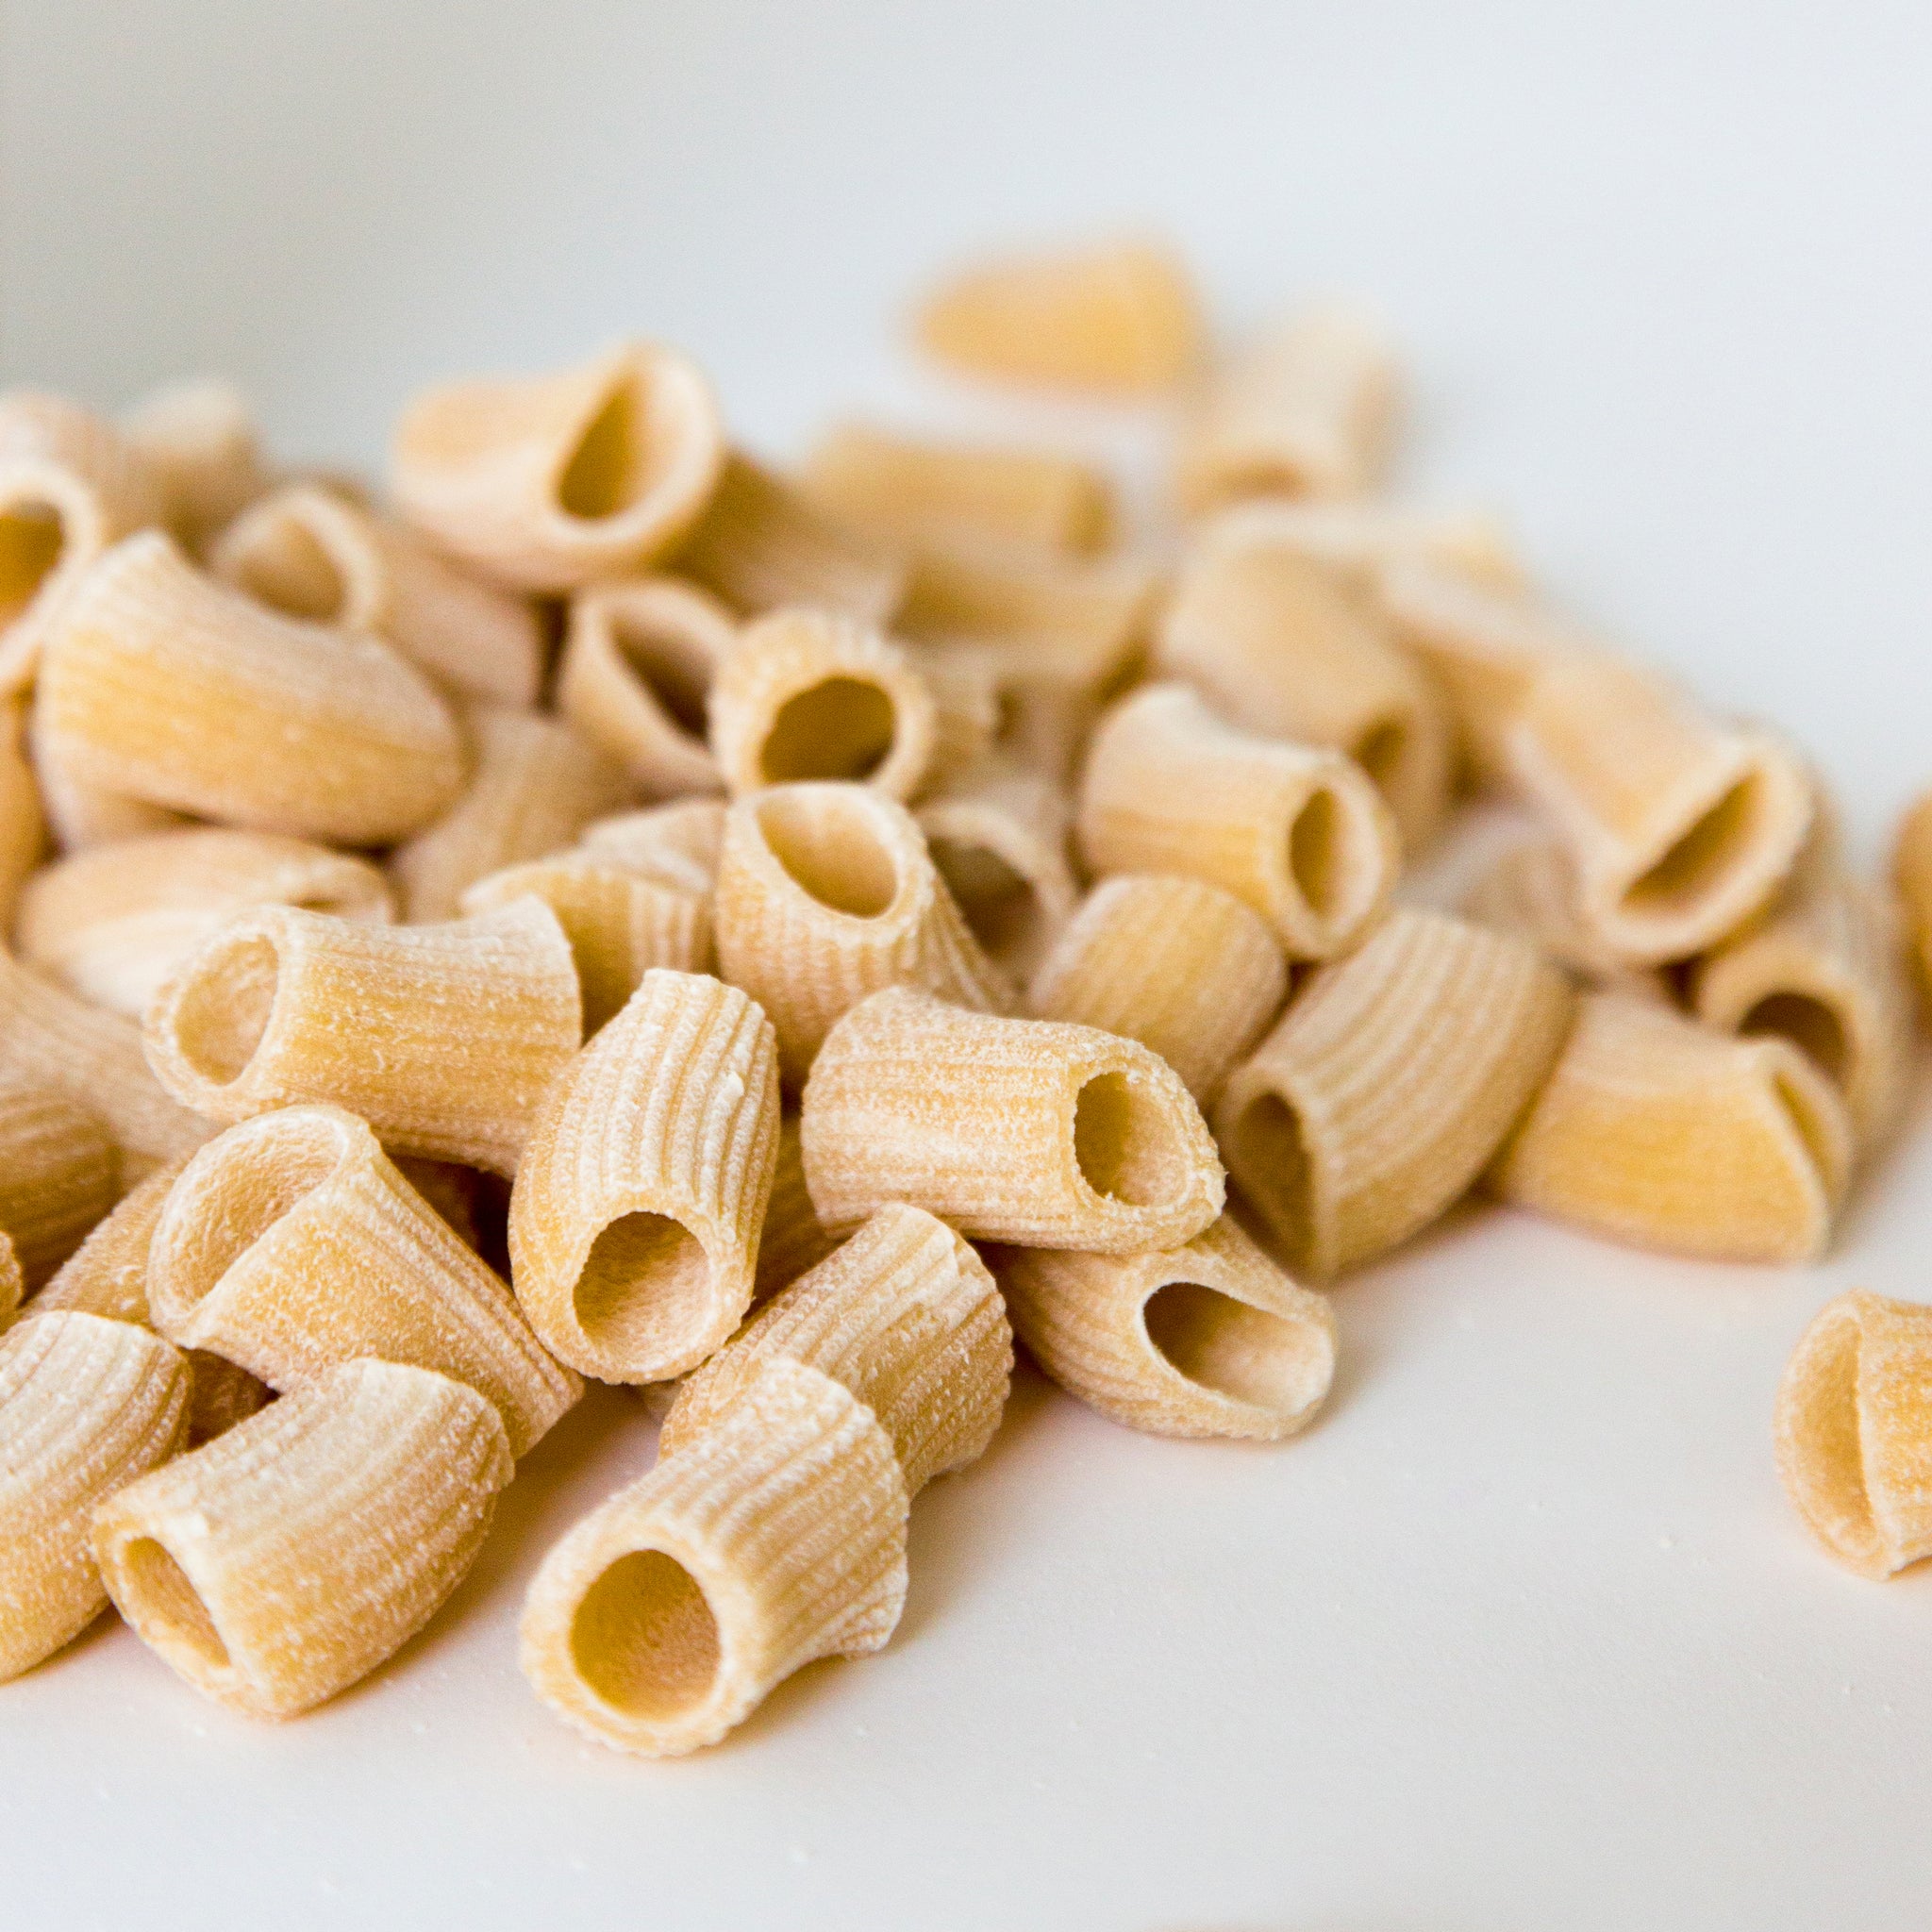 Your Pasta Bundle: 1 Casarecce & 1 Rigatoni